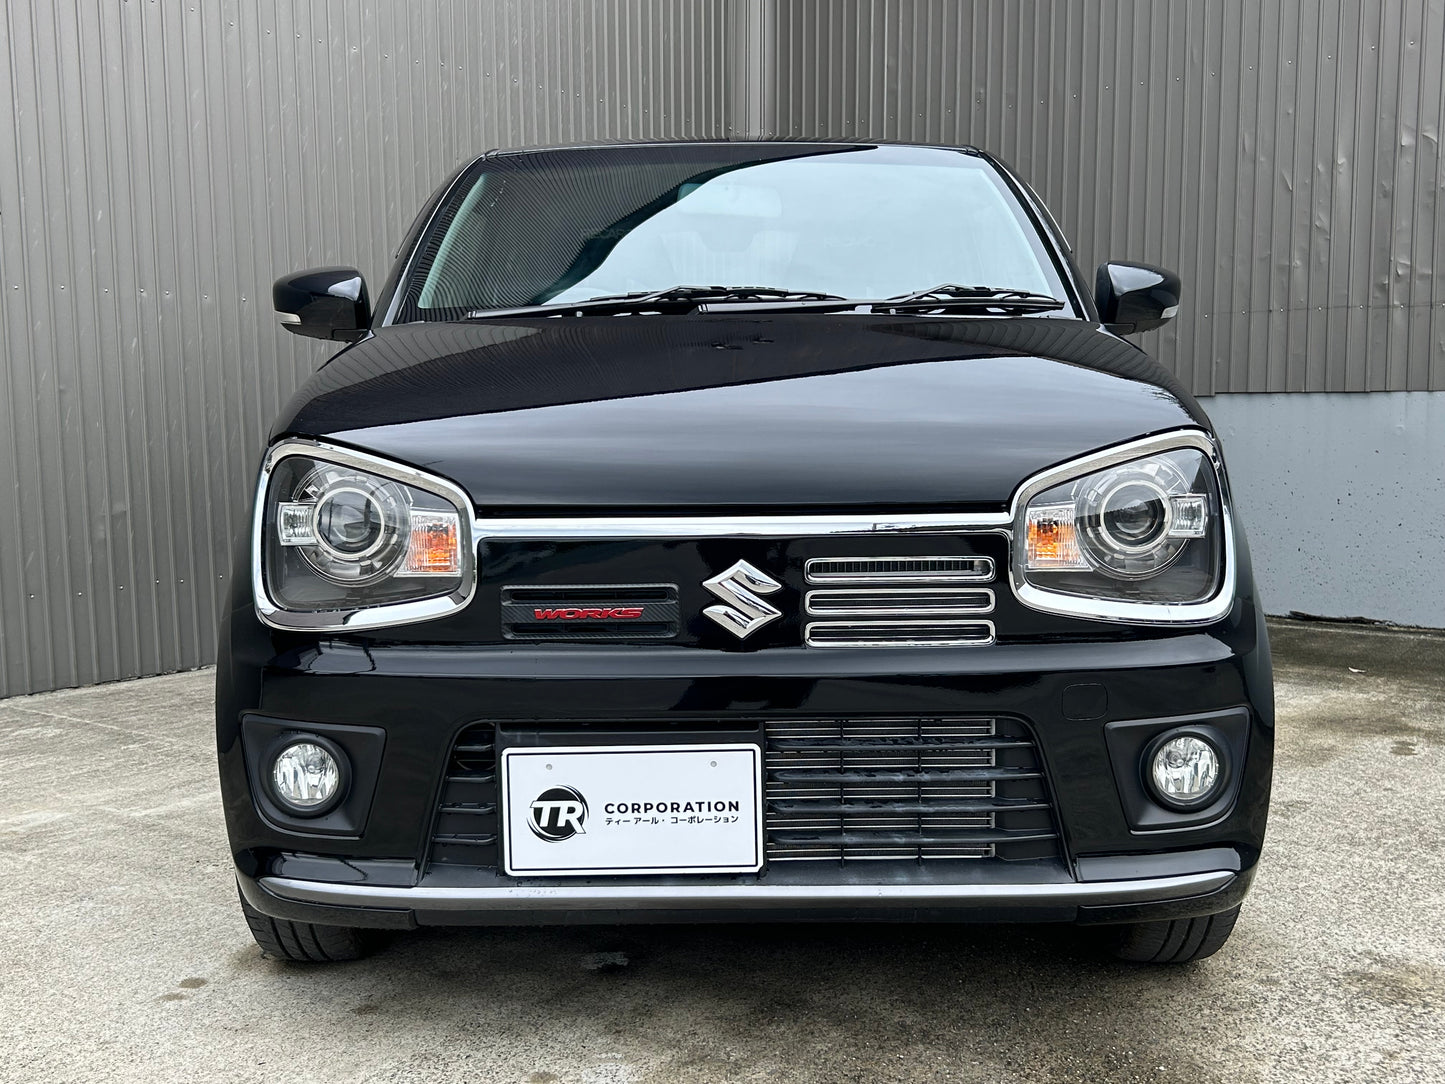 Suzuki Alto Works Turbo